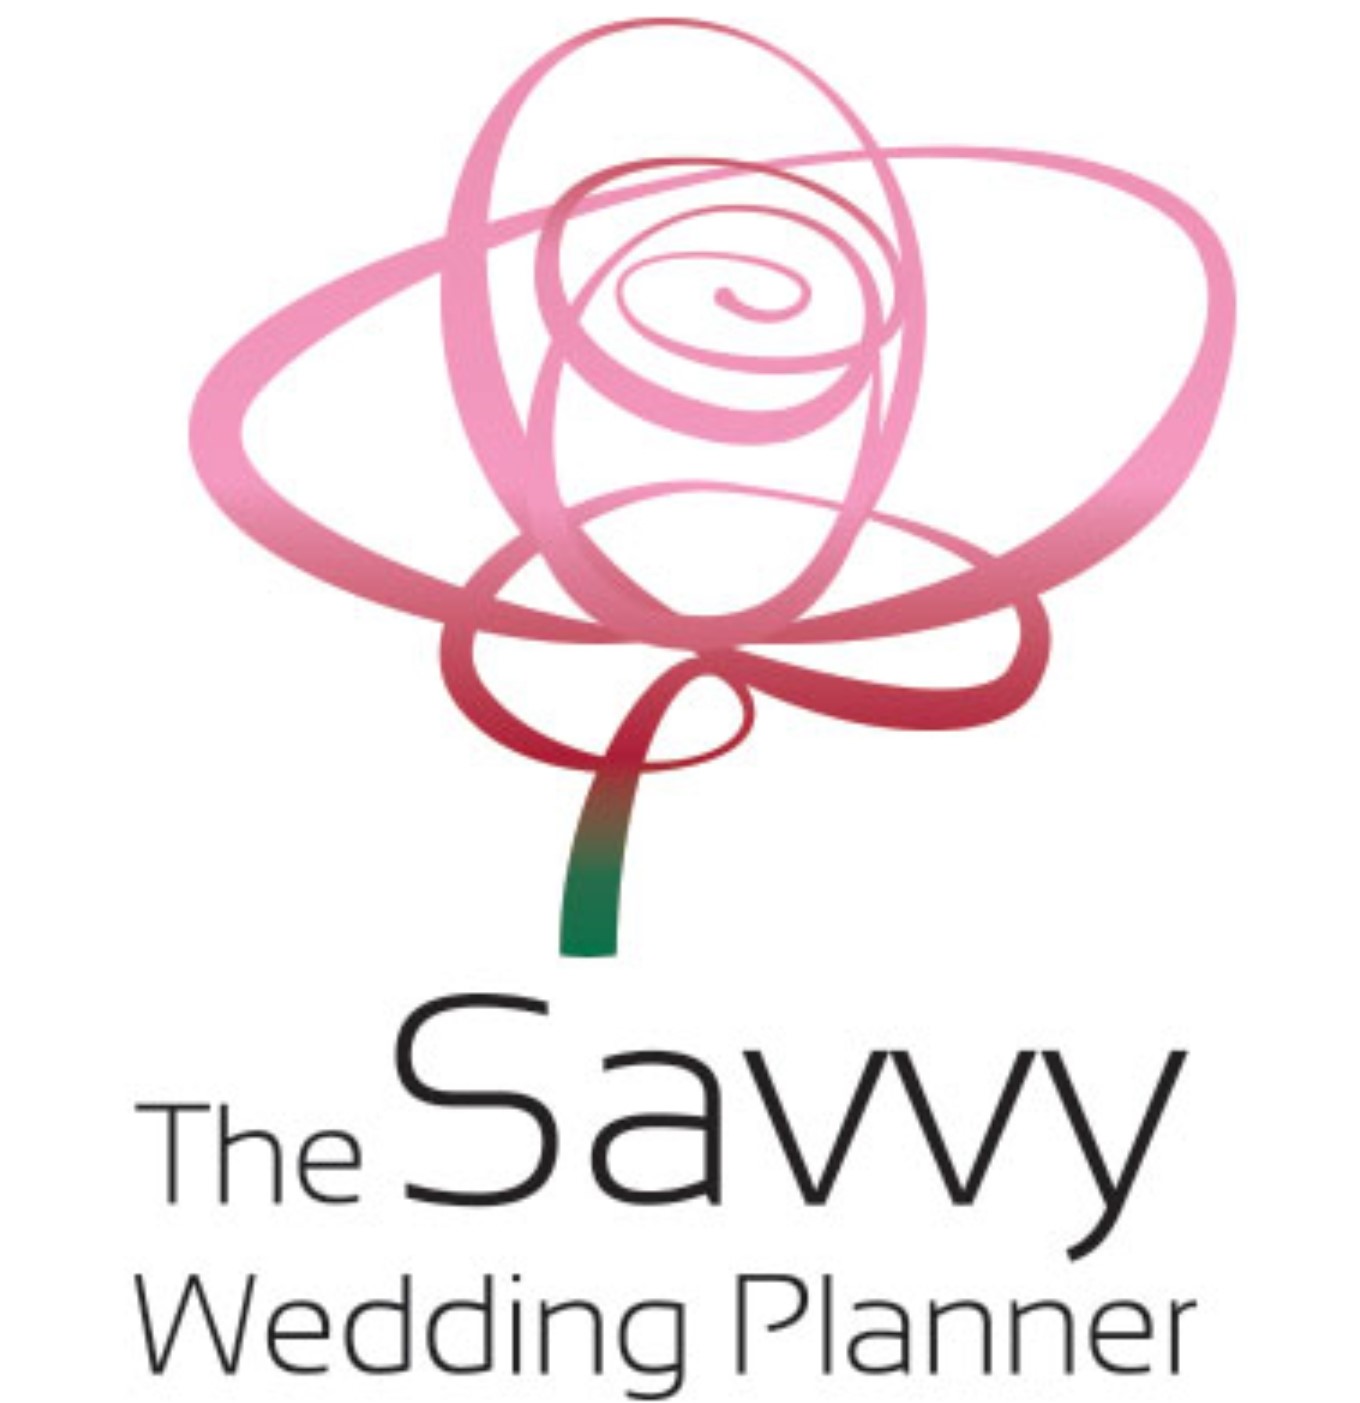 The Savvy Wedding Planner logo